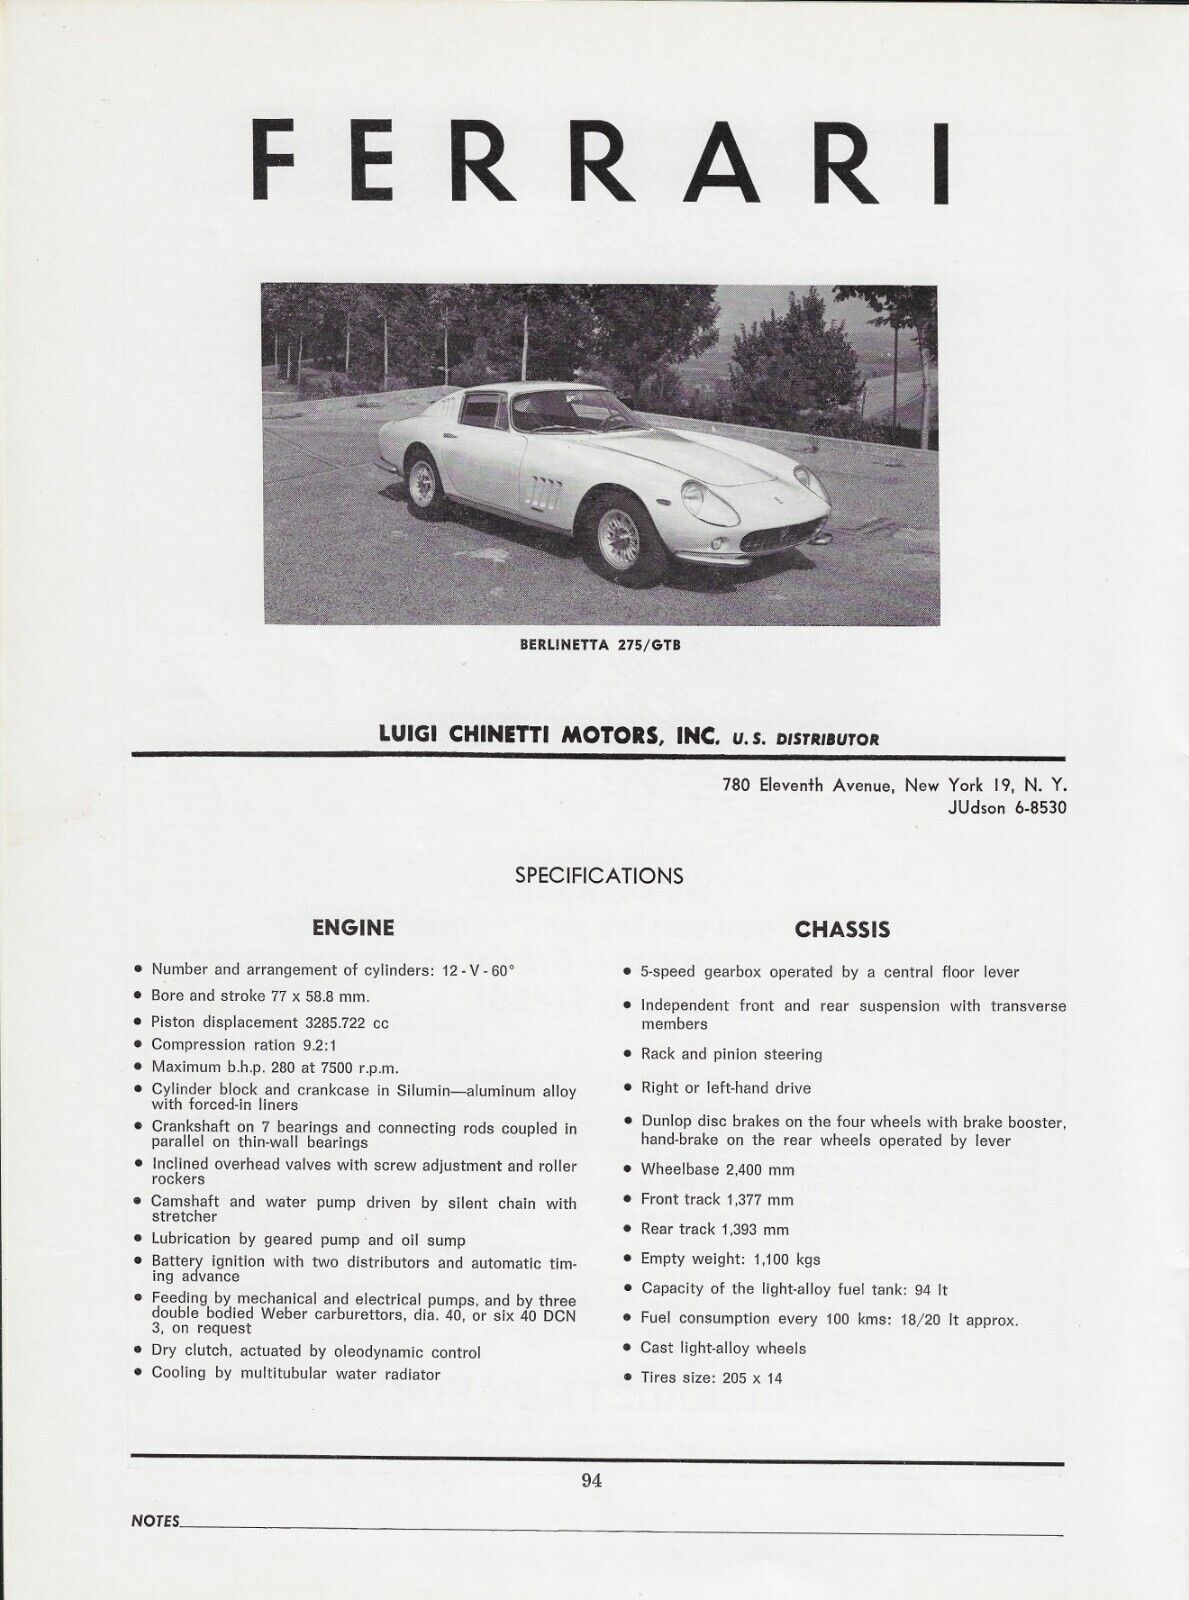 1965 Ferrari Berlinetta 275/GTB Coupe Chinetti Motors Engine Vintage Print Ad